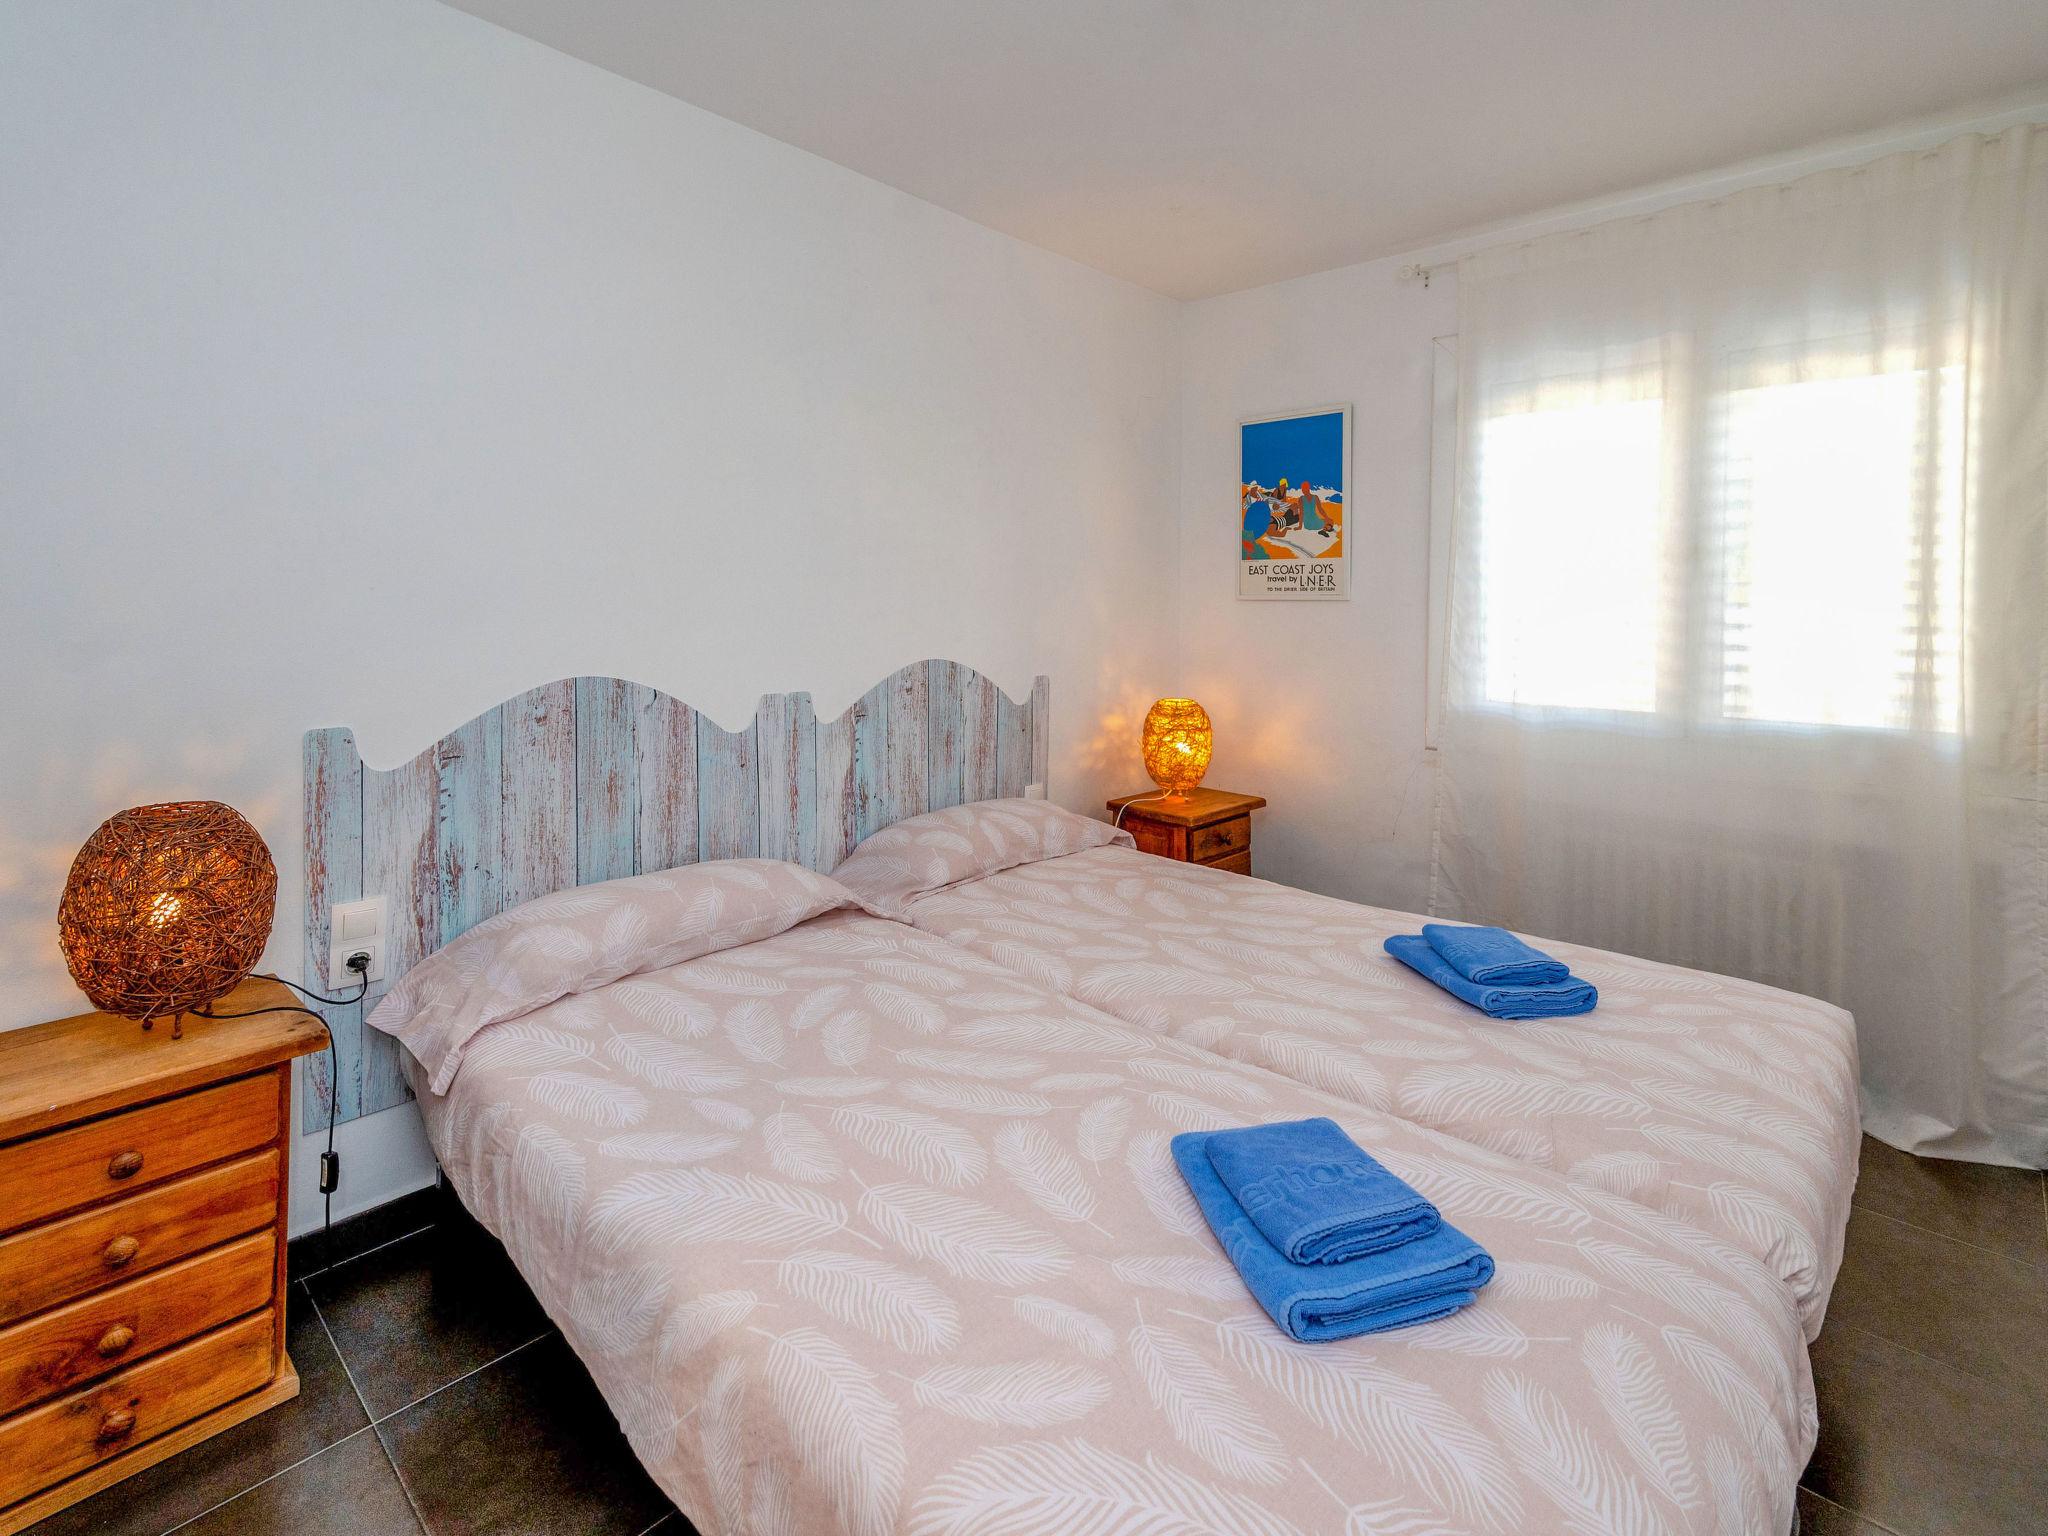 Photo 4 - Appartement de 3 chambres à Sant Andreu de Llavaneres avec piscine et vues à la mer